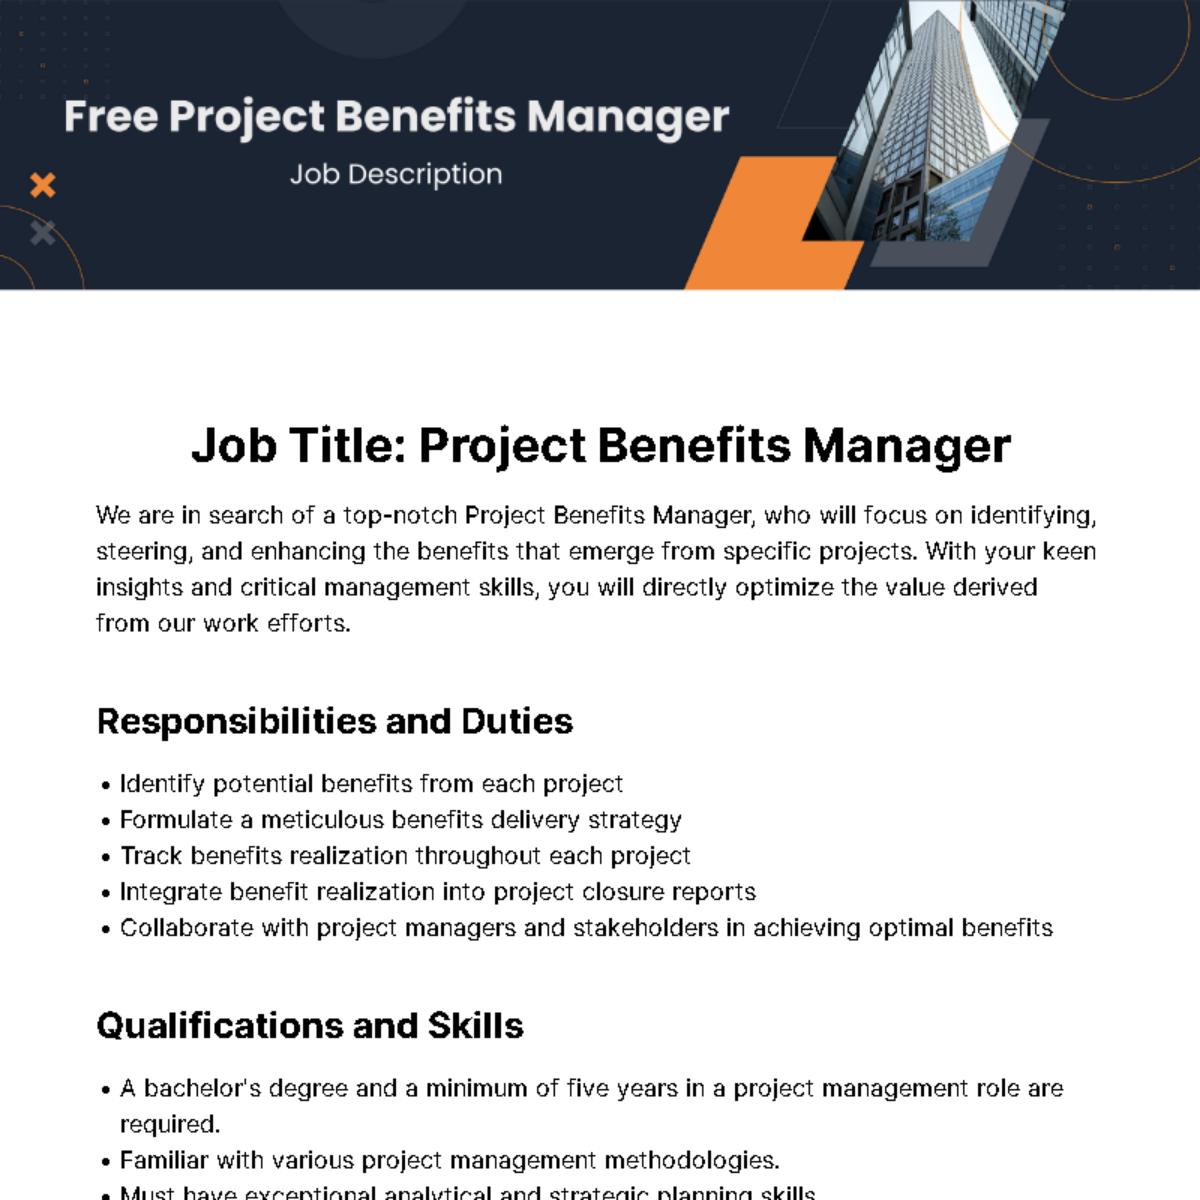 Free Project Benefits Manager Job Description Template